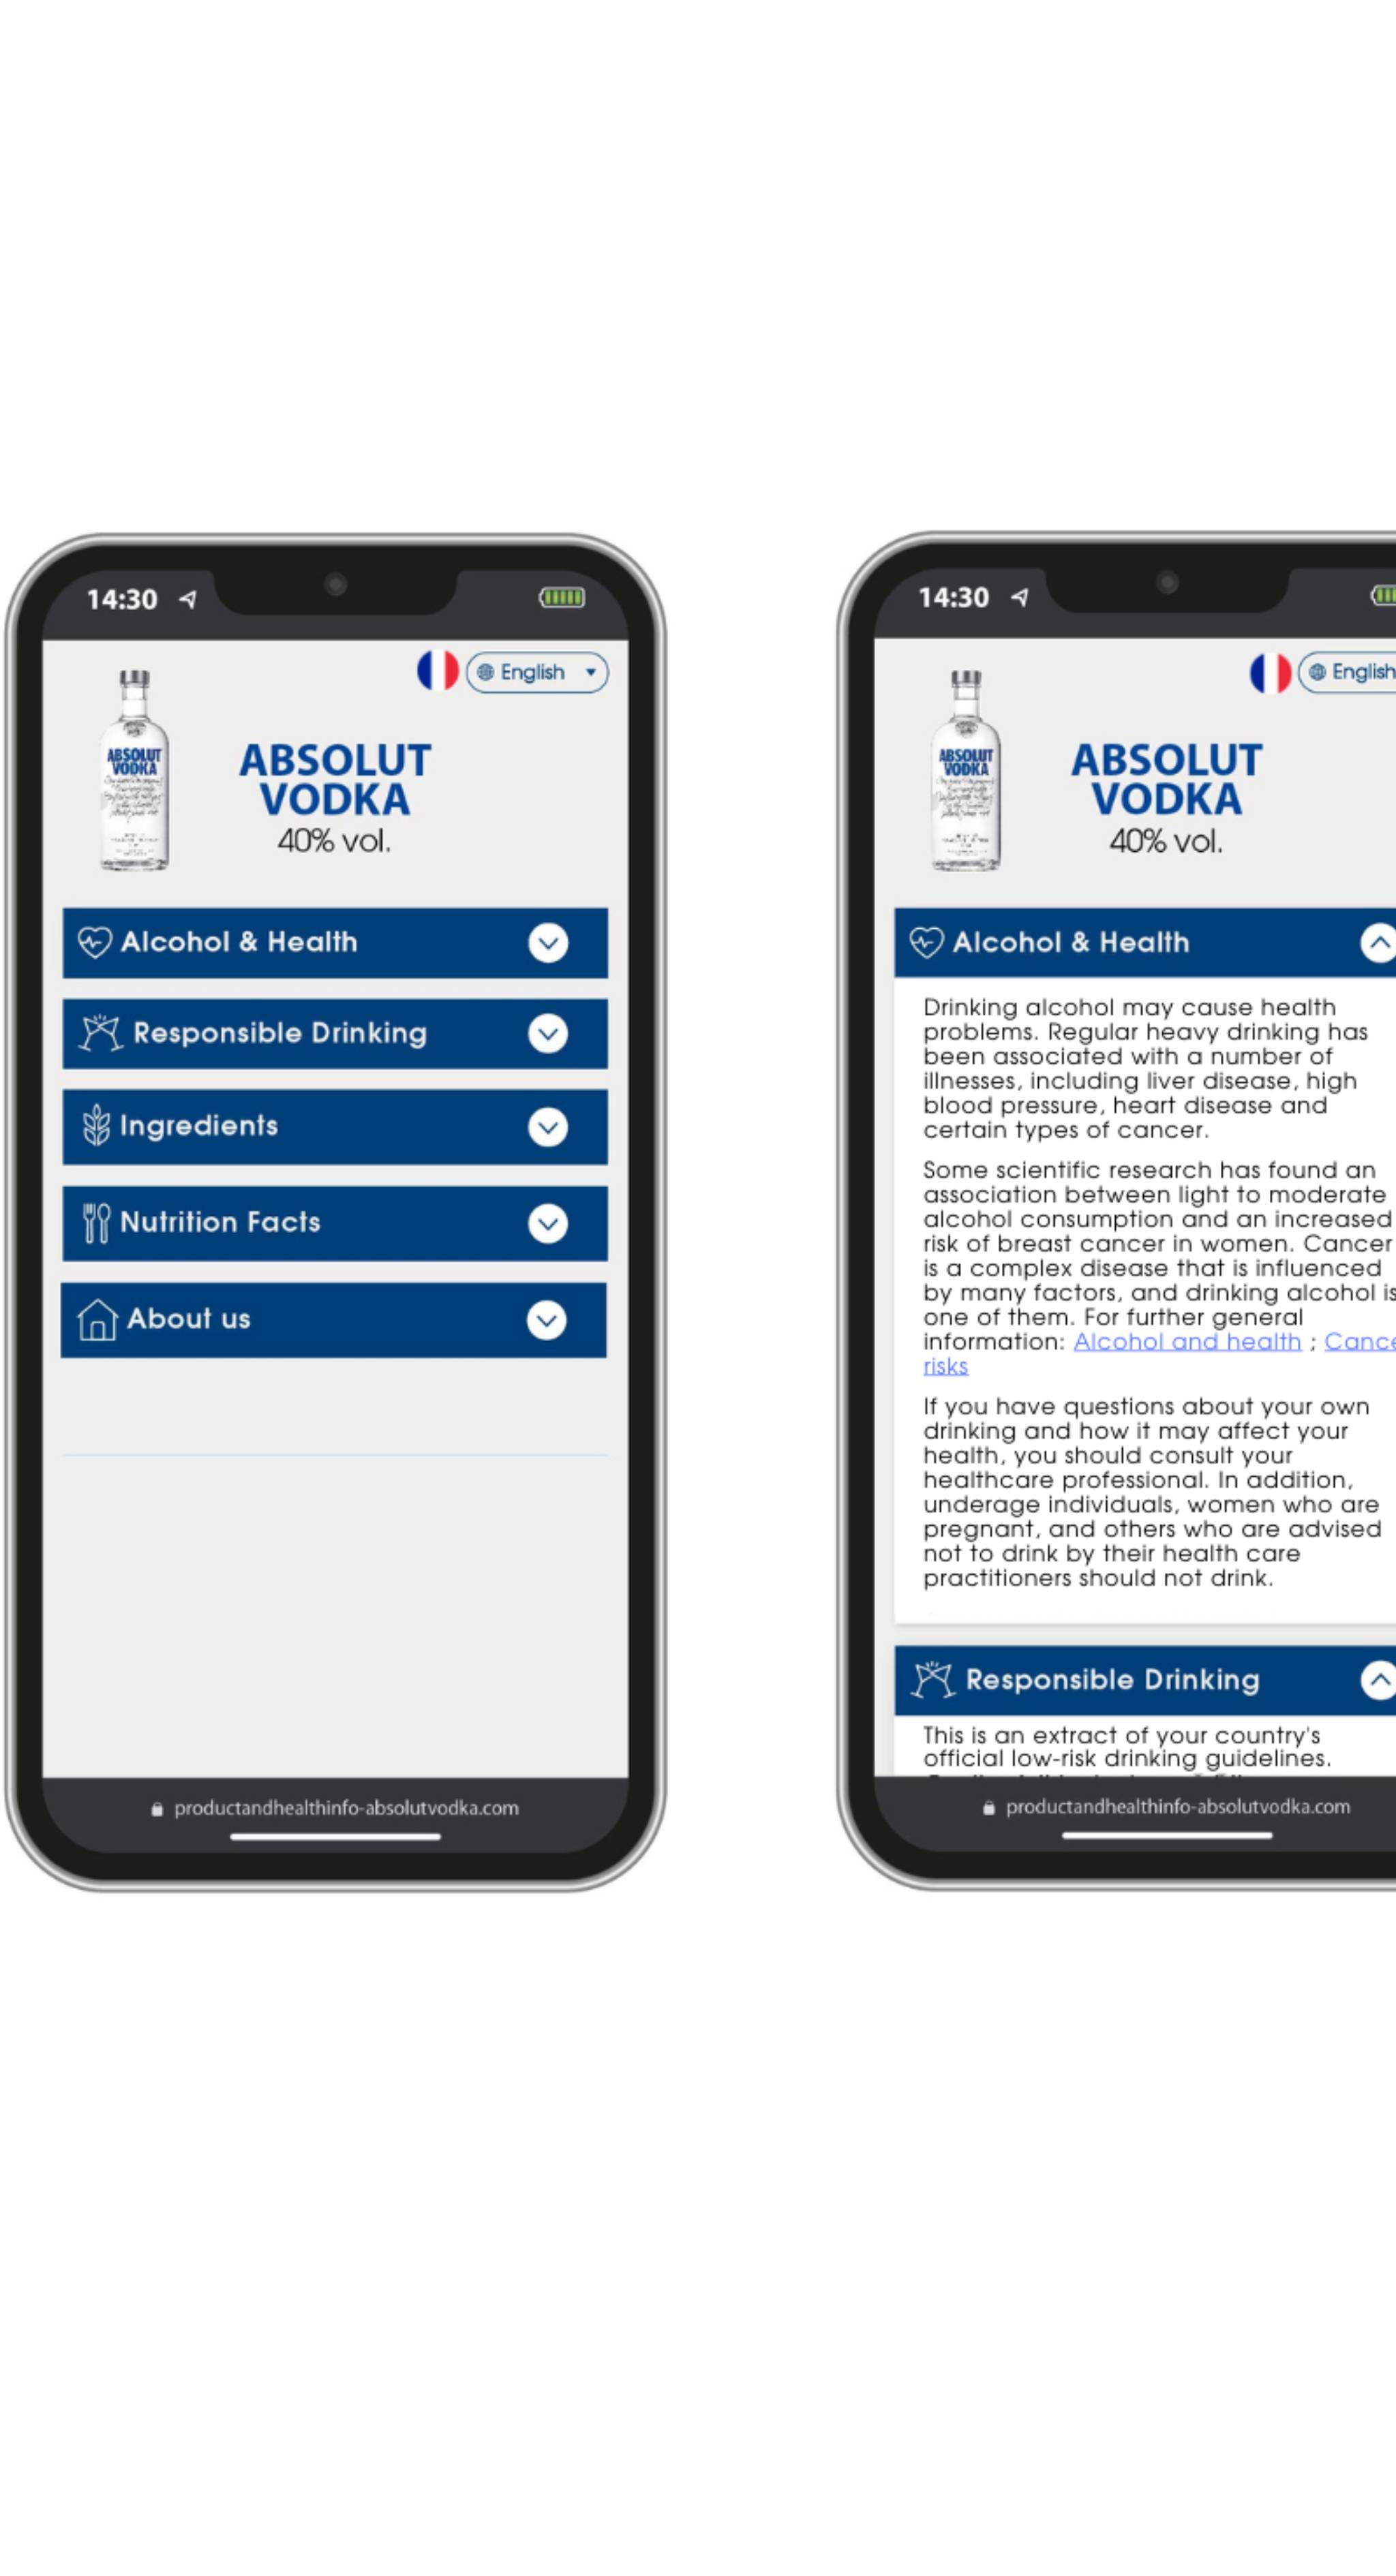 Pernod Ricard's digital labels boost transparency